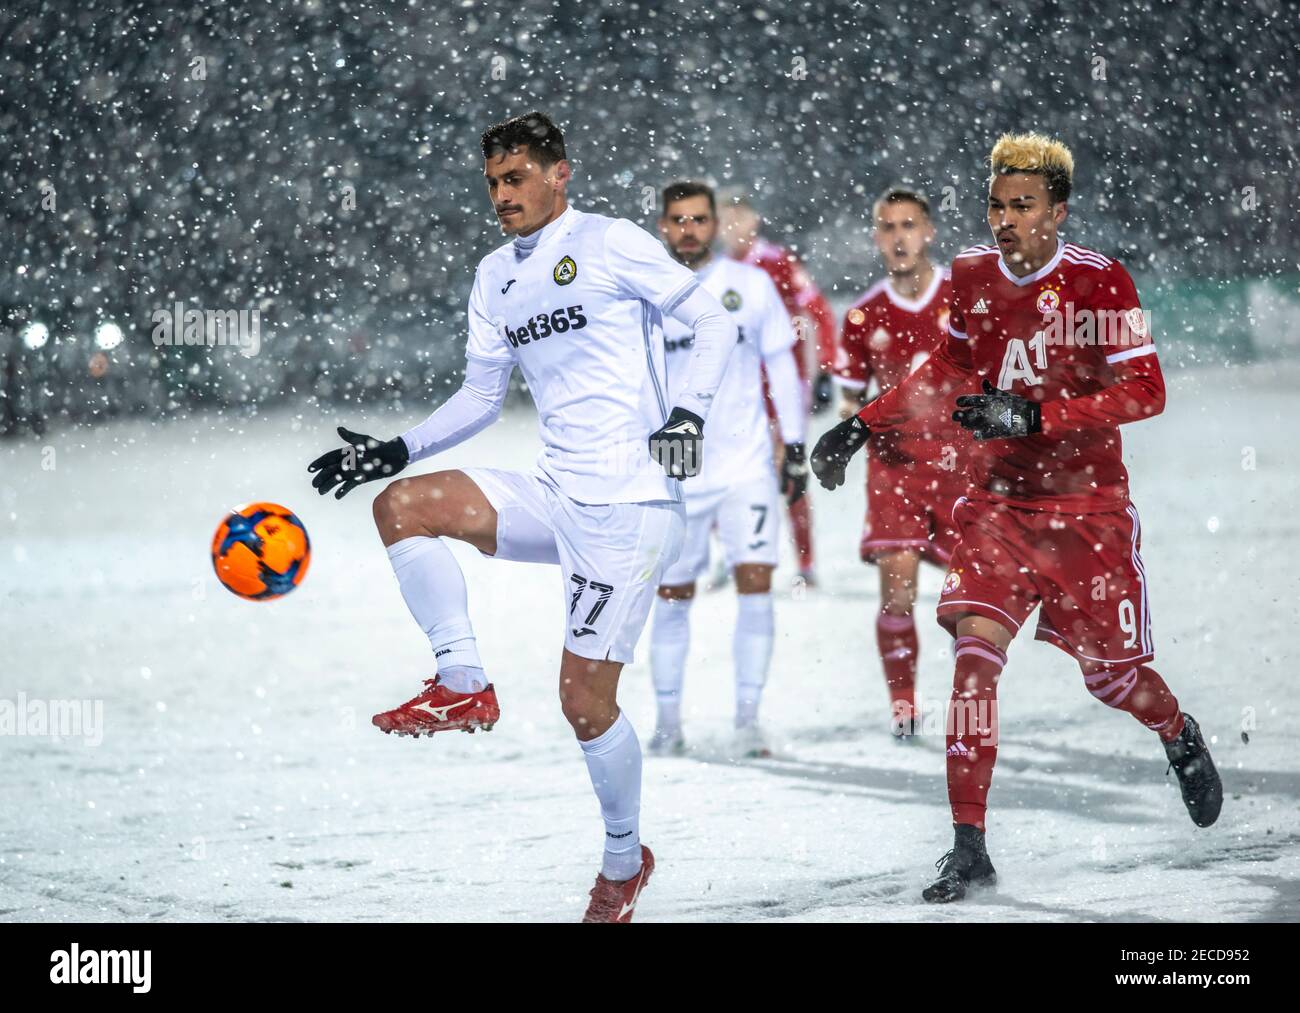 Sofia, Bulgaria - Feb 13 2021: Vulchev playing with the ball followed by Penaranda during a snowy football match between CSKA Sofia and Slavia Stock Photo